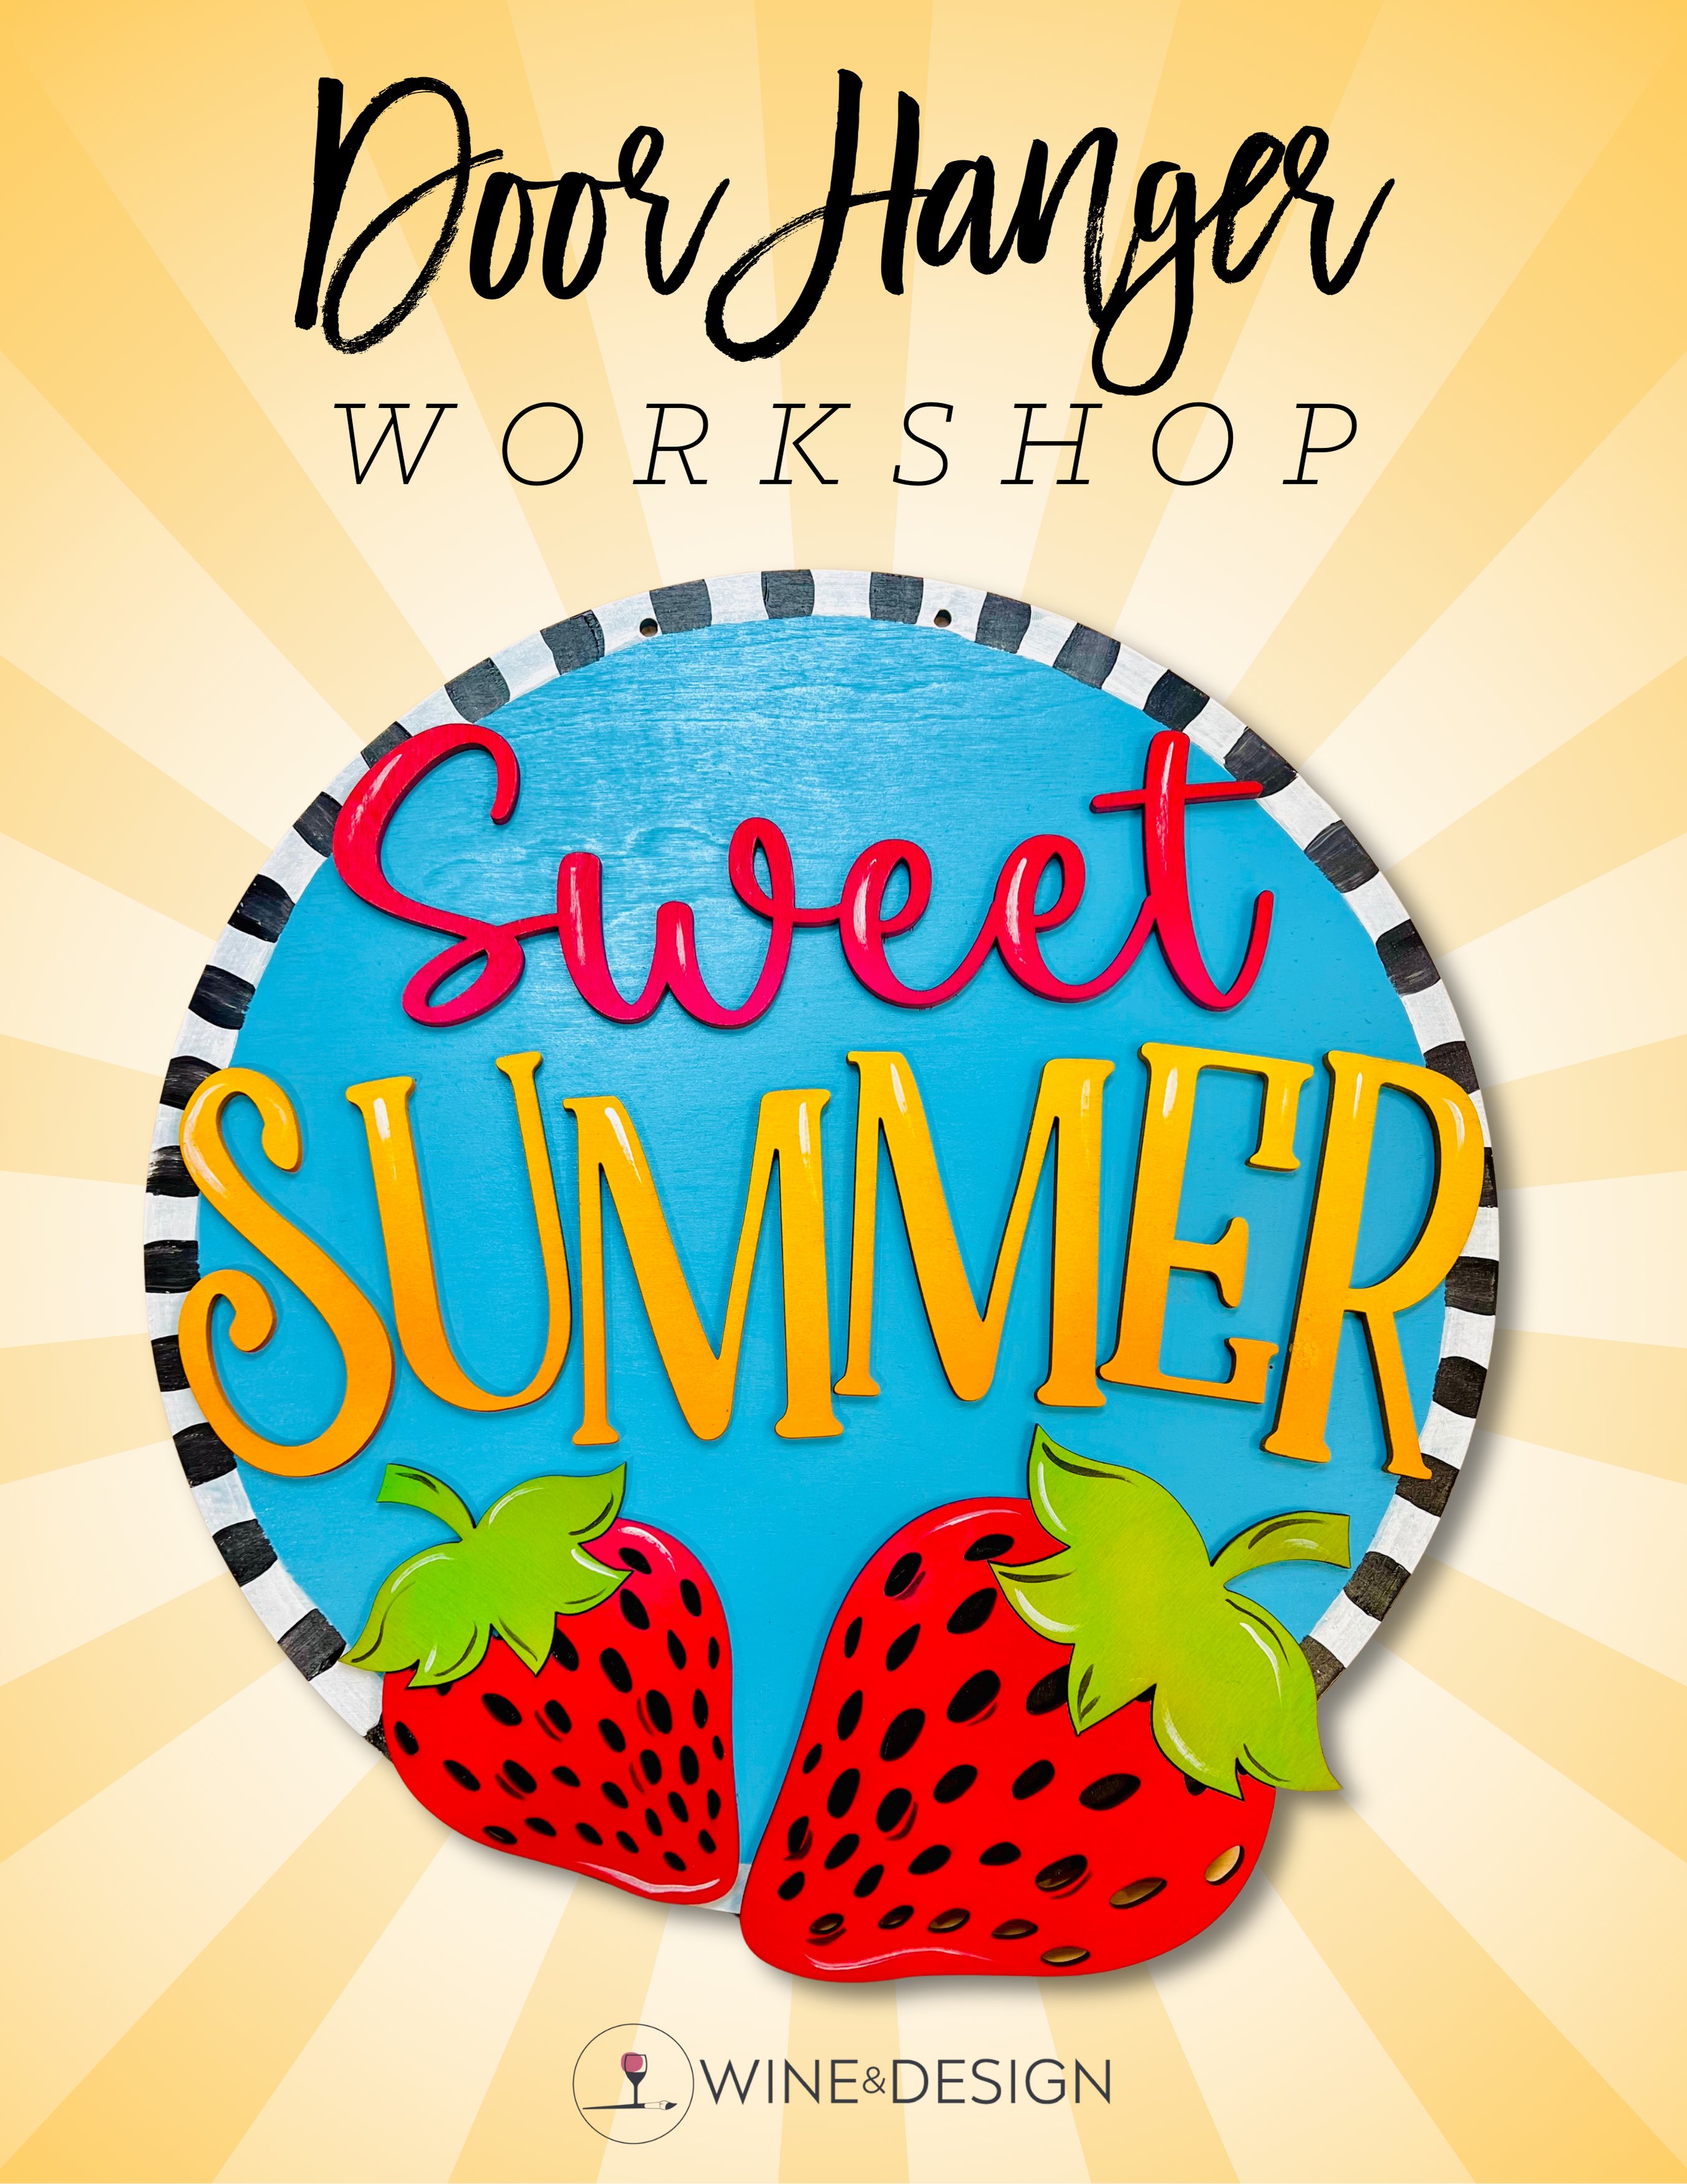 ON WHEELS Pick & Paint @ DJ's Berry Patch in Apex! "Sweet Summer Strawberry" Door Hanger 5:30-8:00pm 